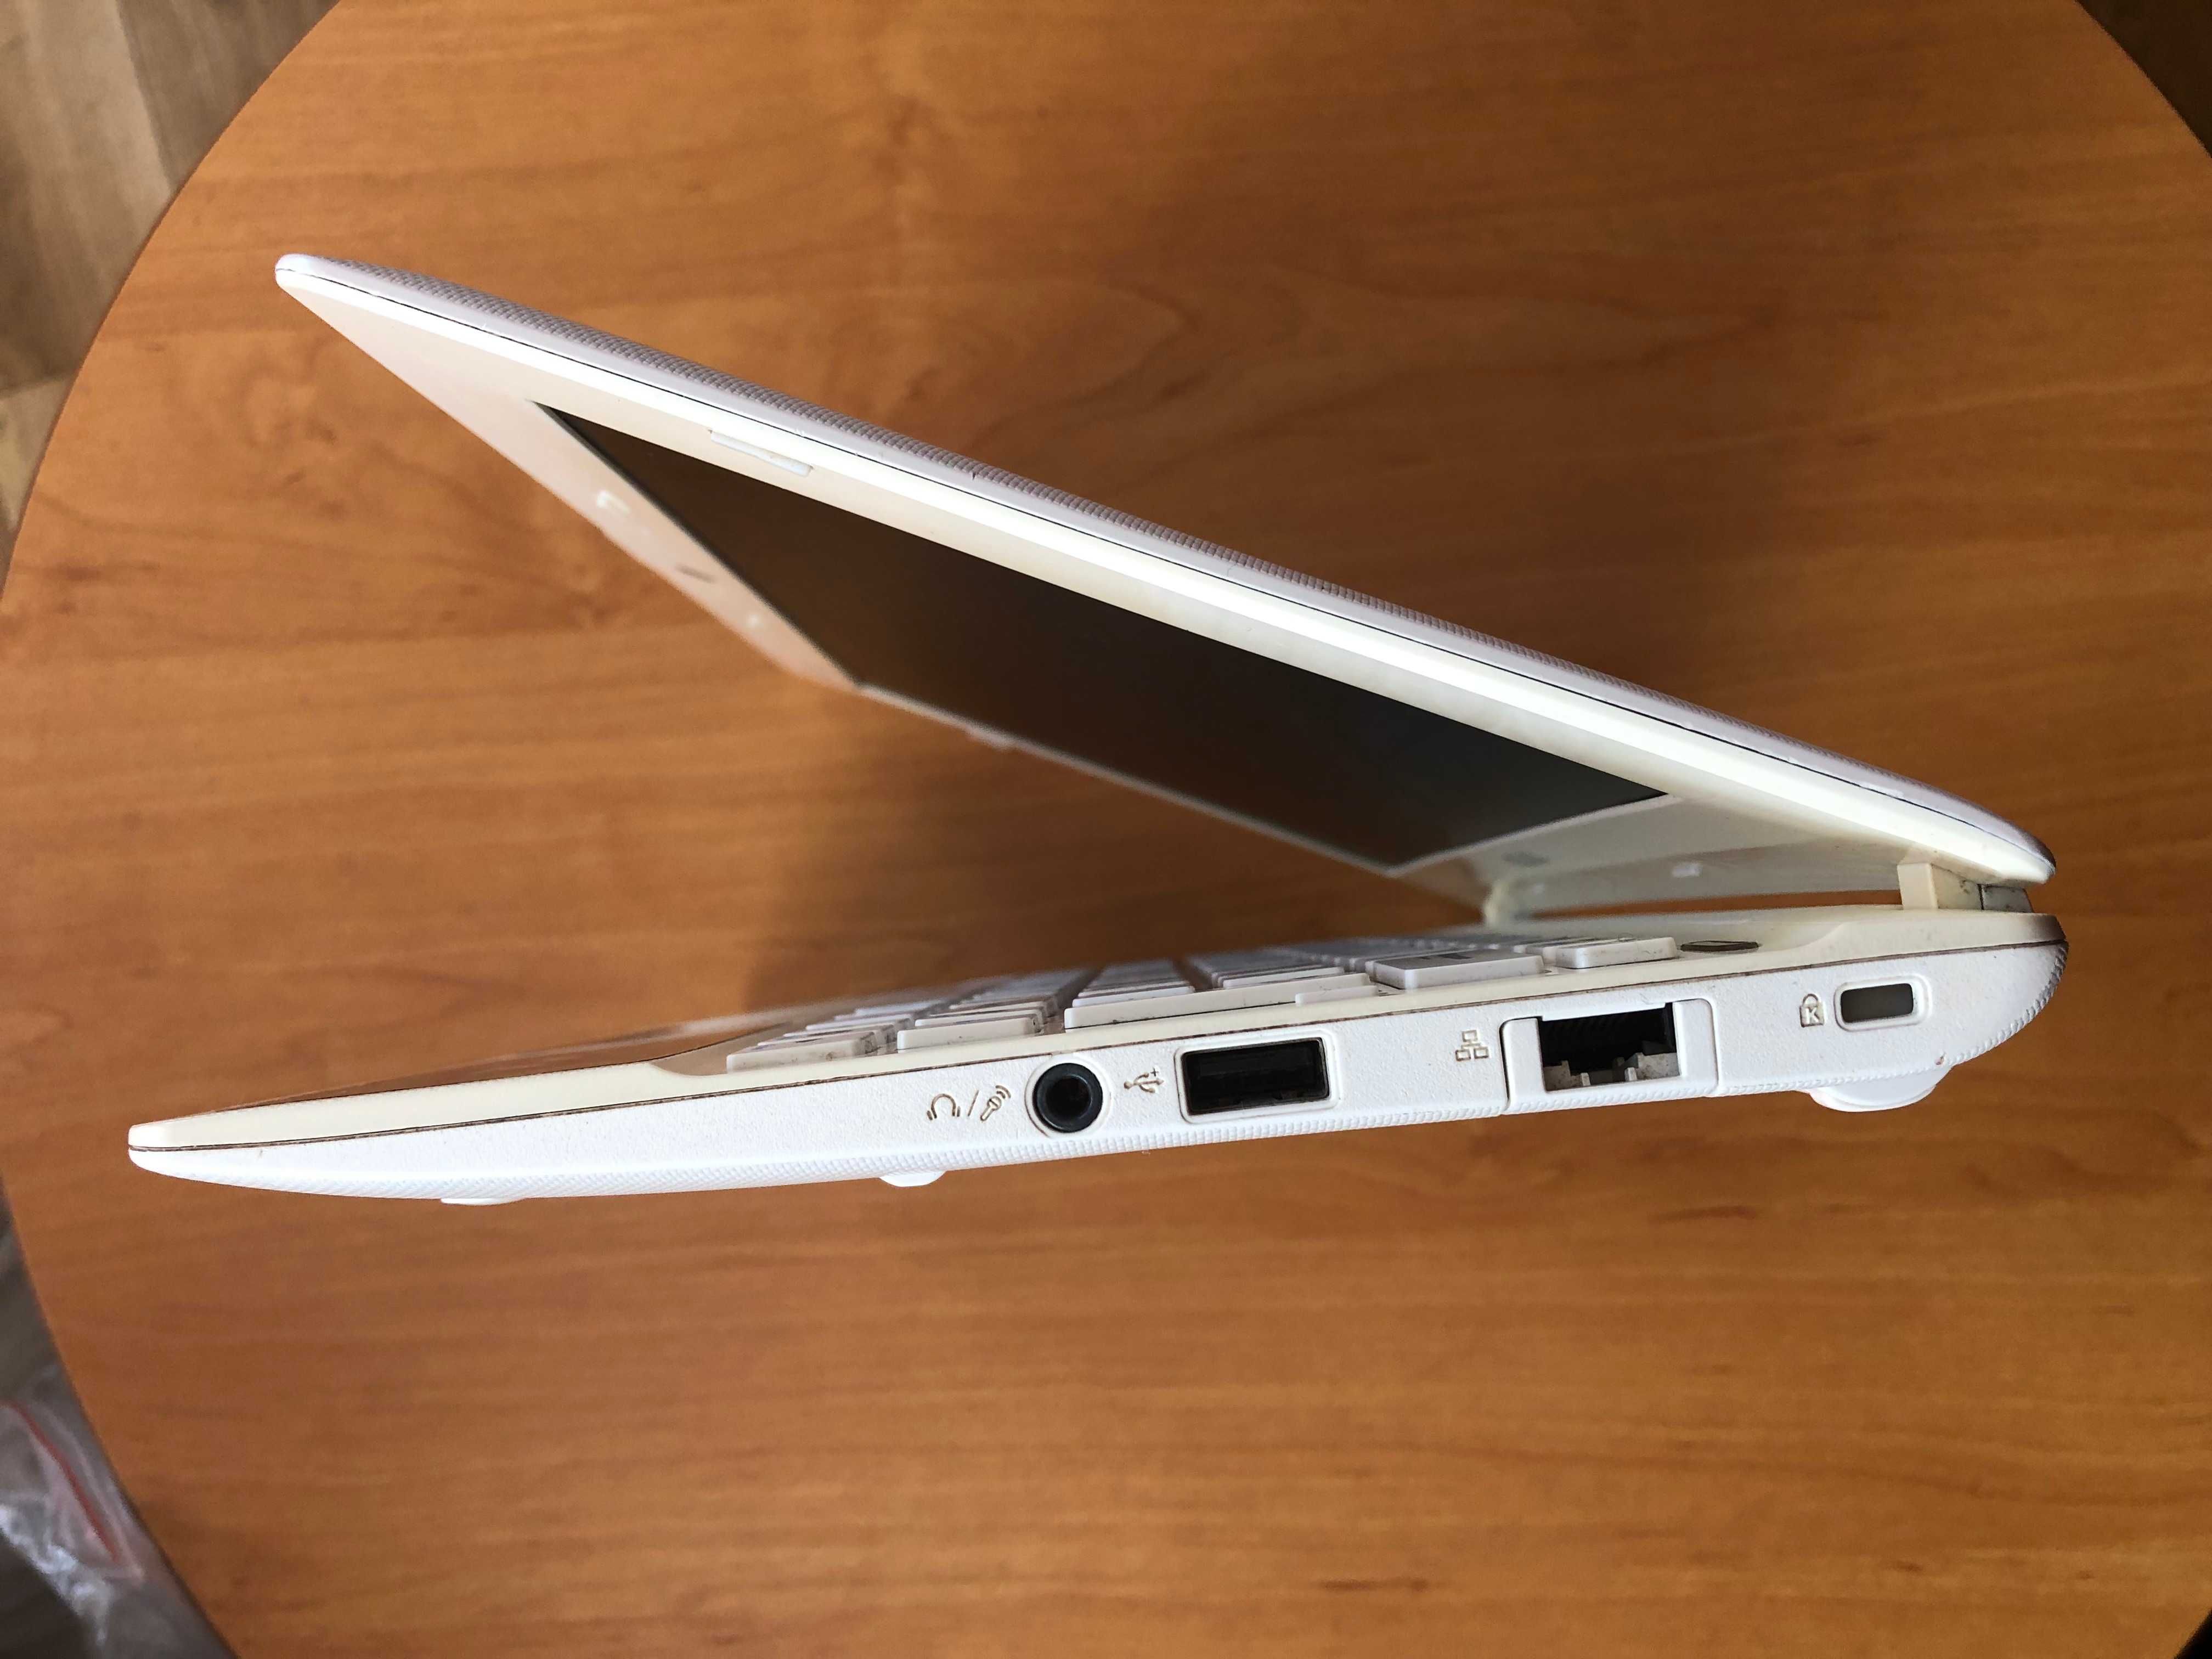 Laptop 10,1 cala Asus Eee PC X101H Windows 10 Pro (26,2x18x2,2 cm)